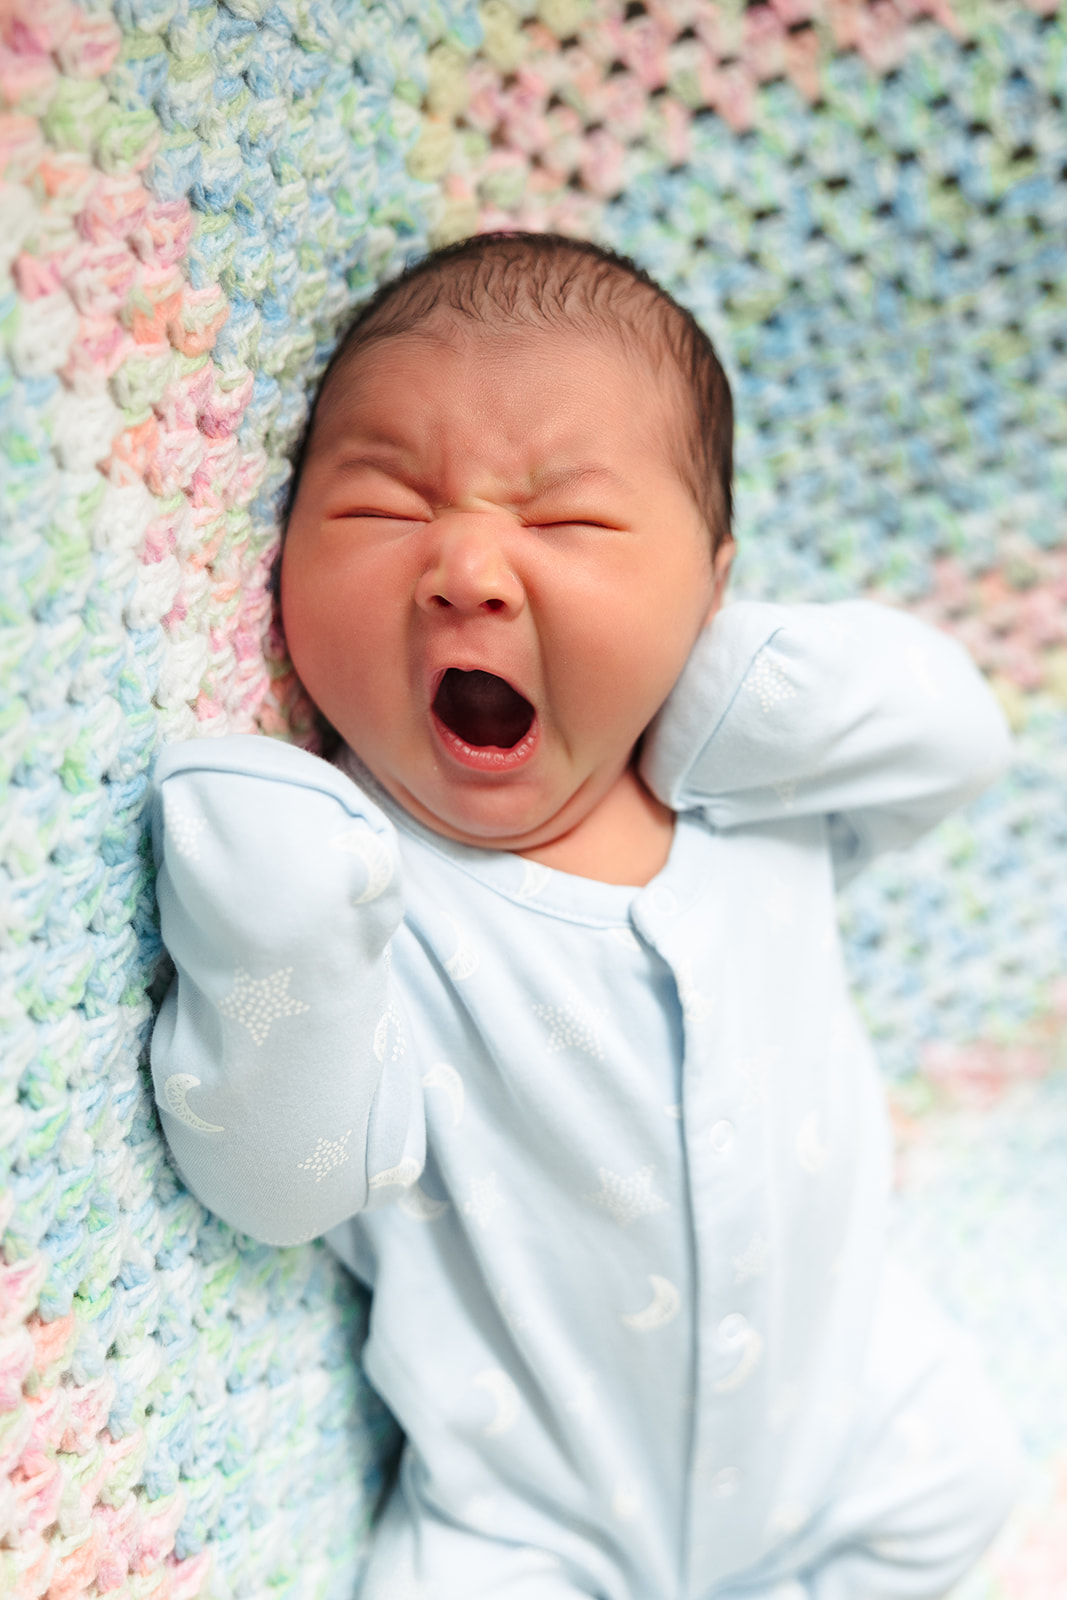 Baby boy yawning during his photoshoot